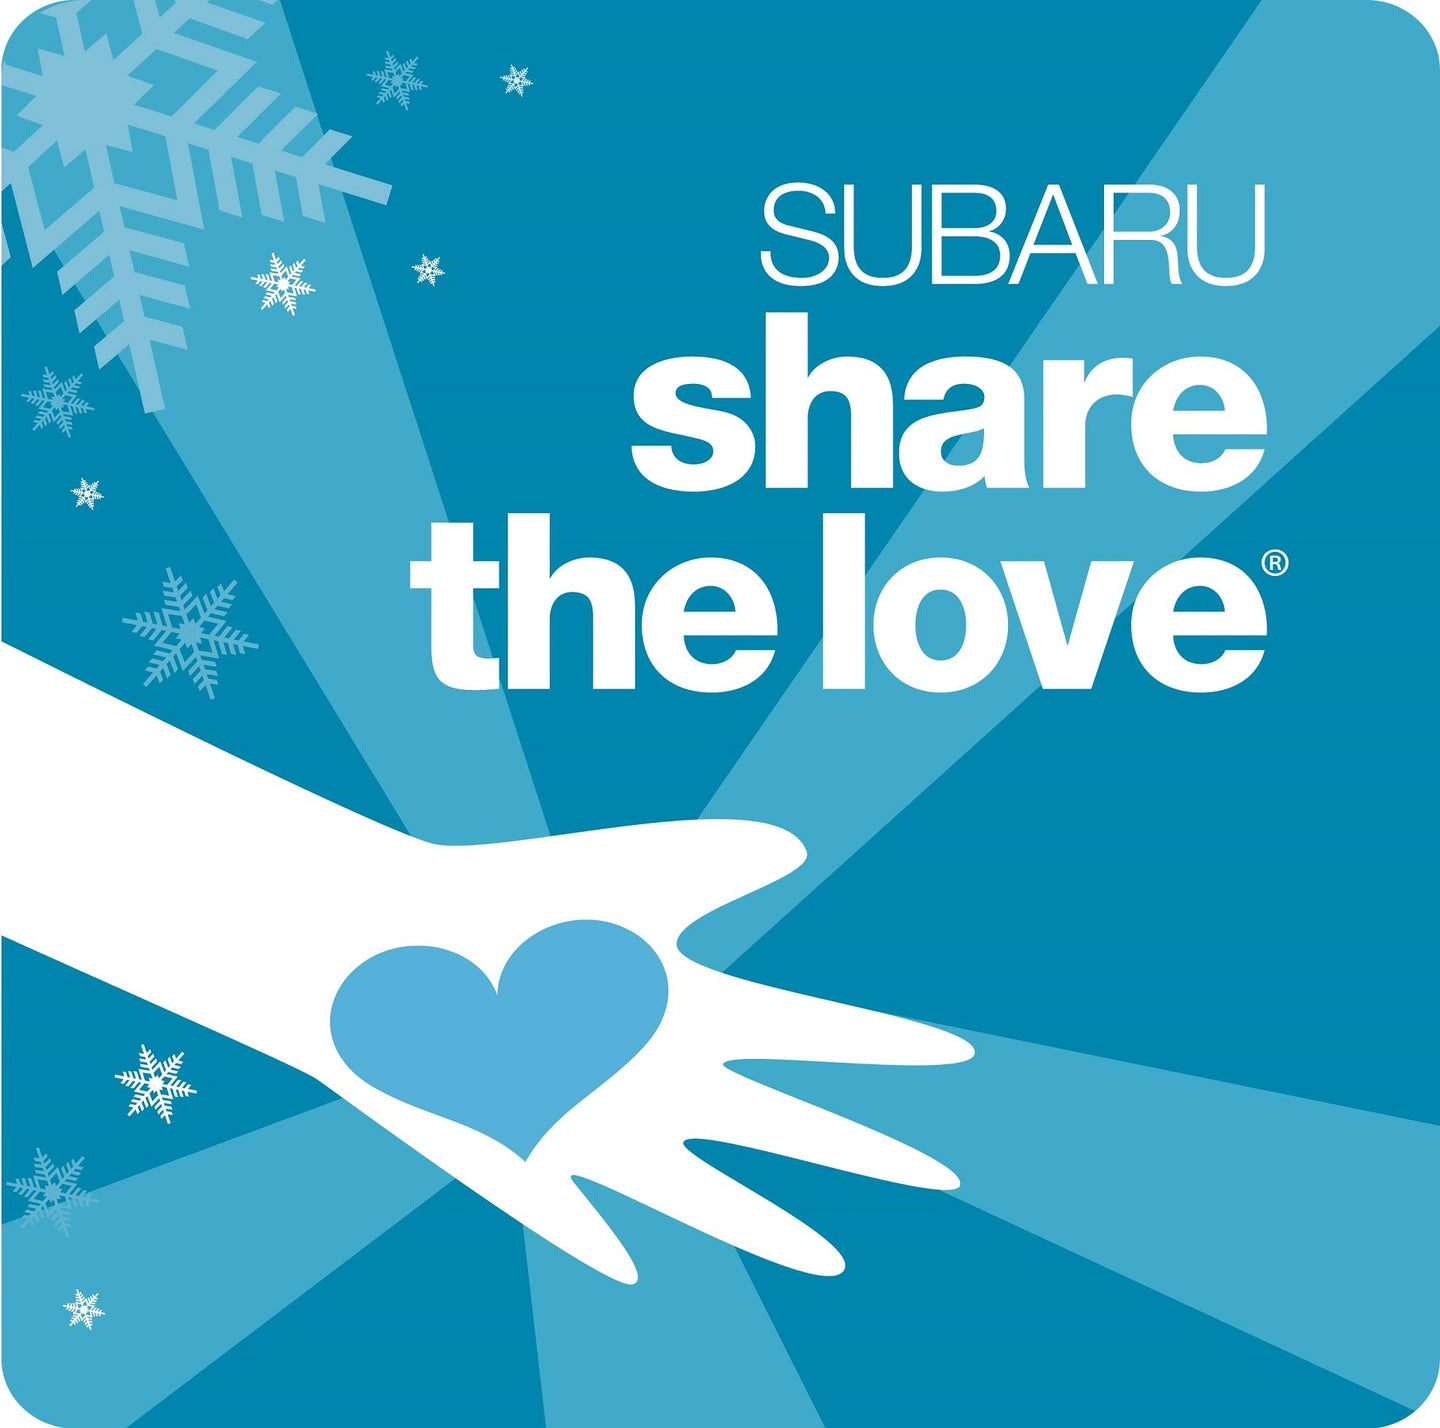 Subaru’s Annual Share the Love Campaign Kicks-Off